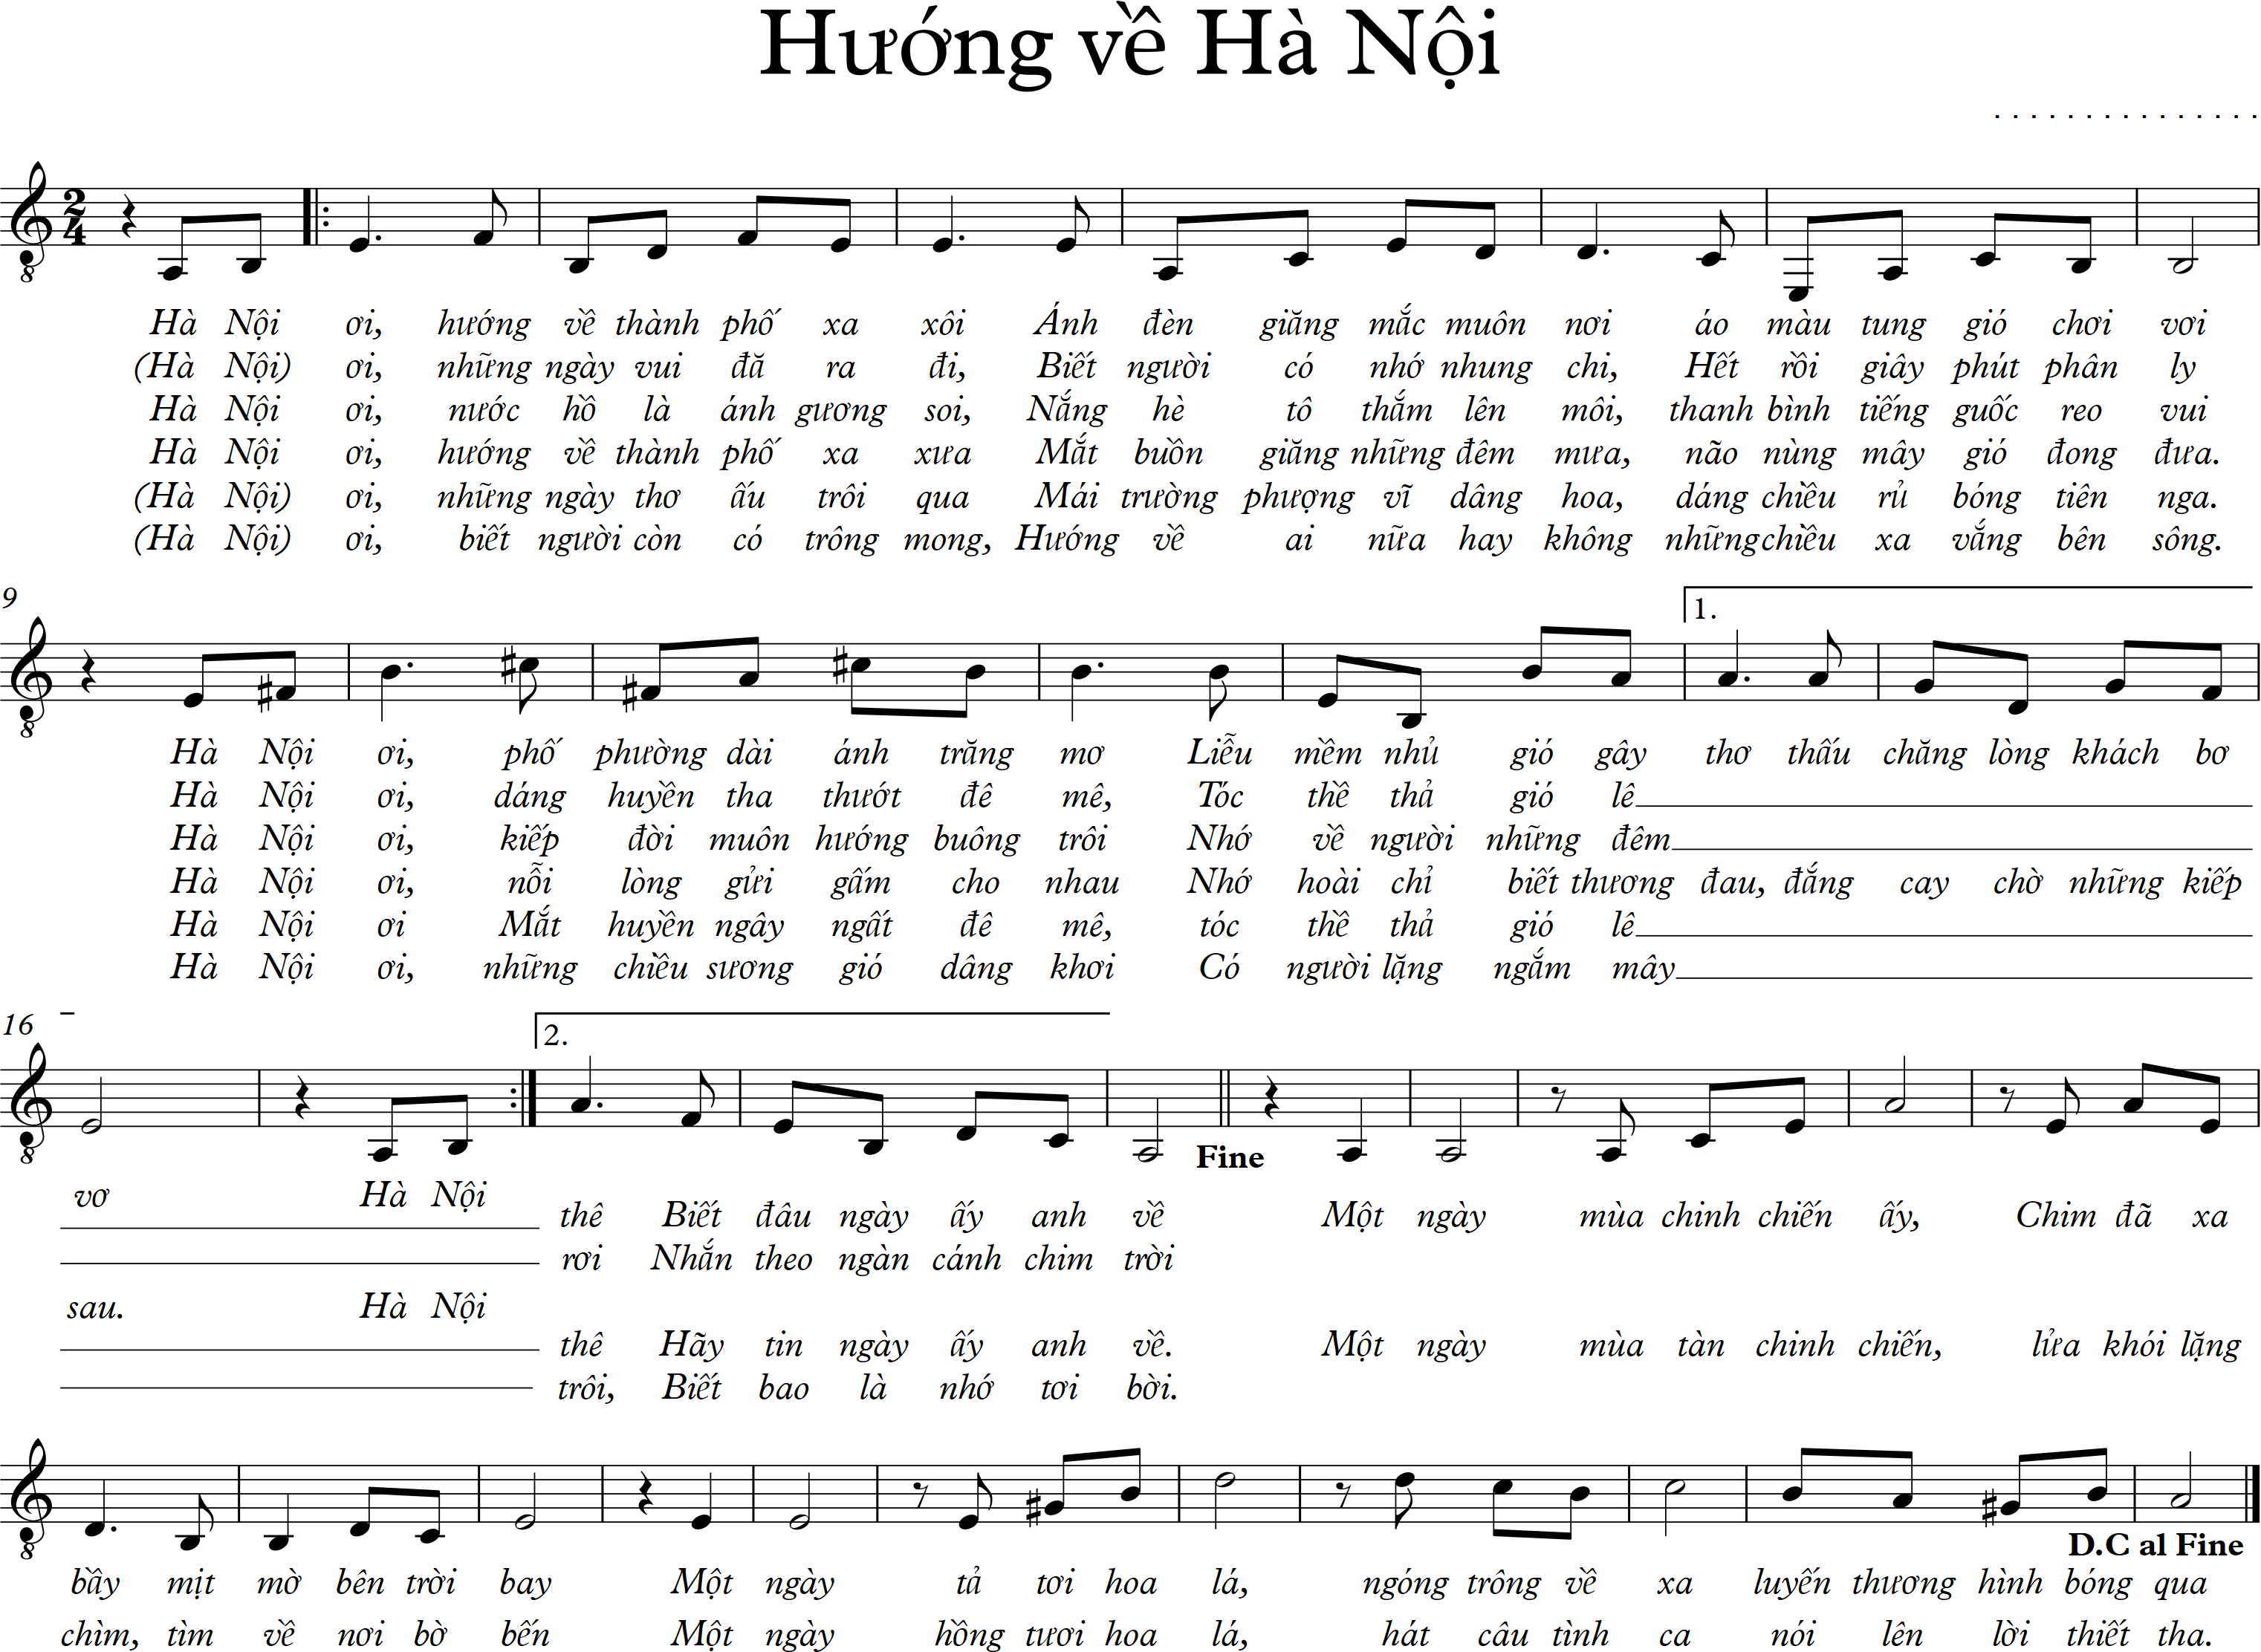 Huong ve Ha Noi - no chord